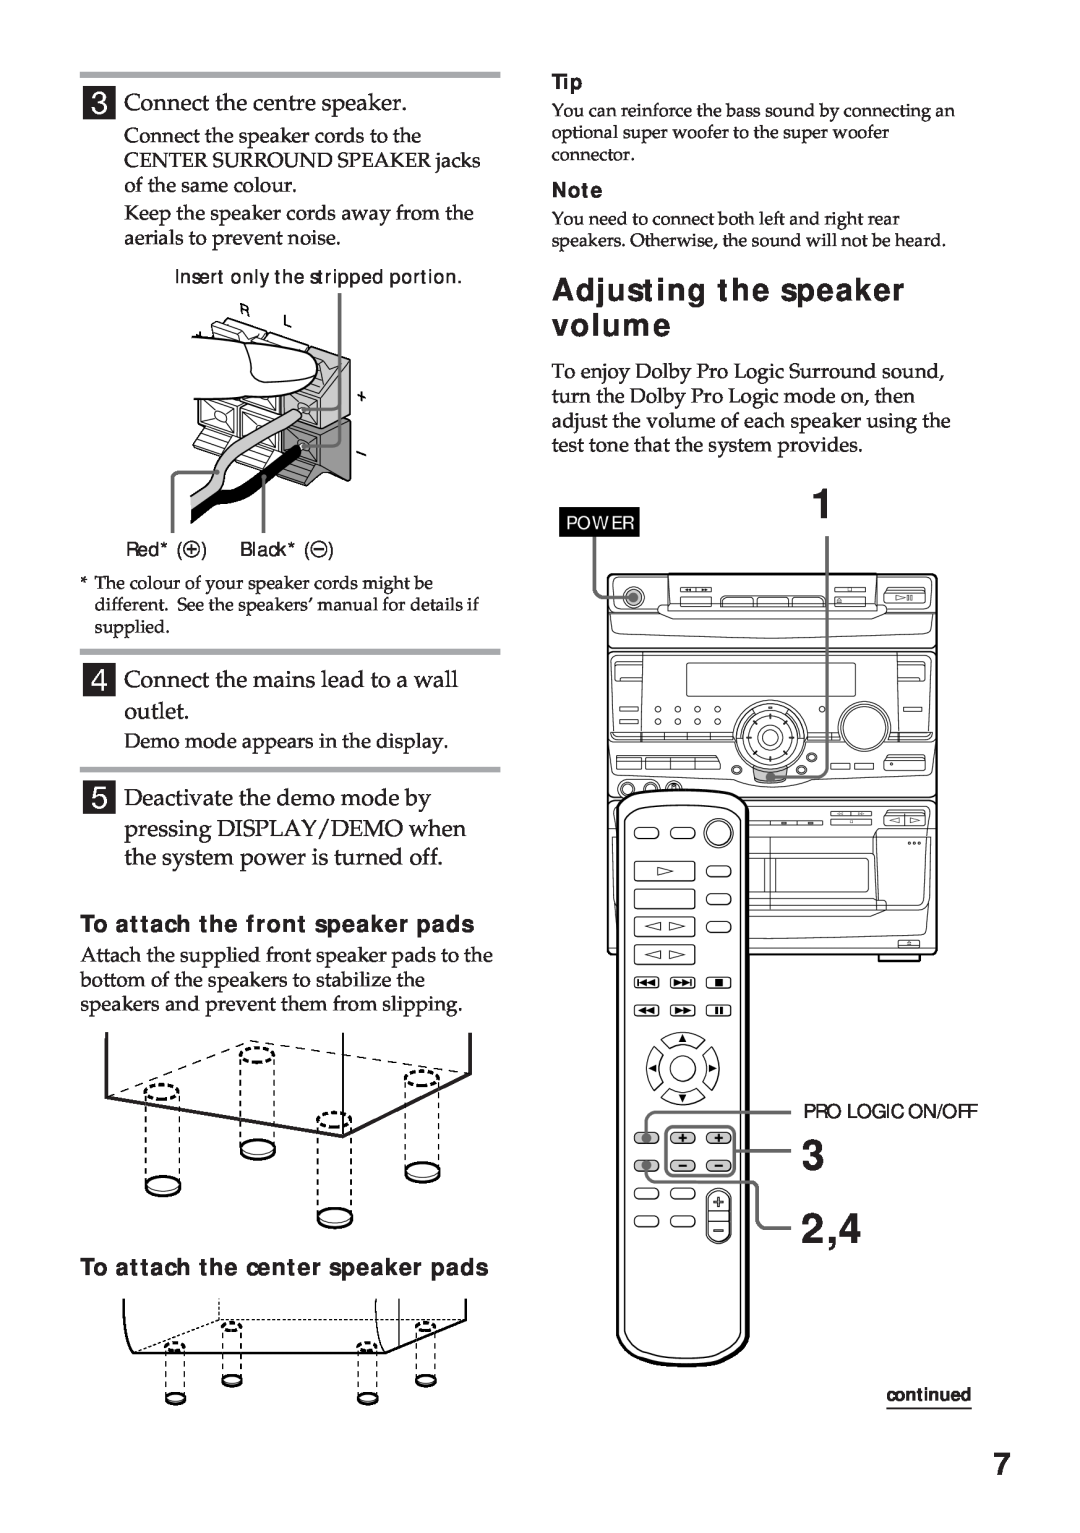 Sony MHC-RX100AV 3 2,4, Adjusting the speaker volume, To attach the front speaker pads, To attach the center speaker pads 